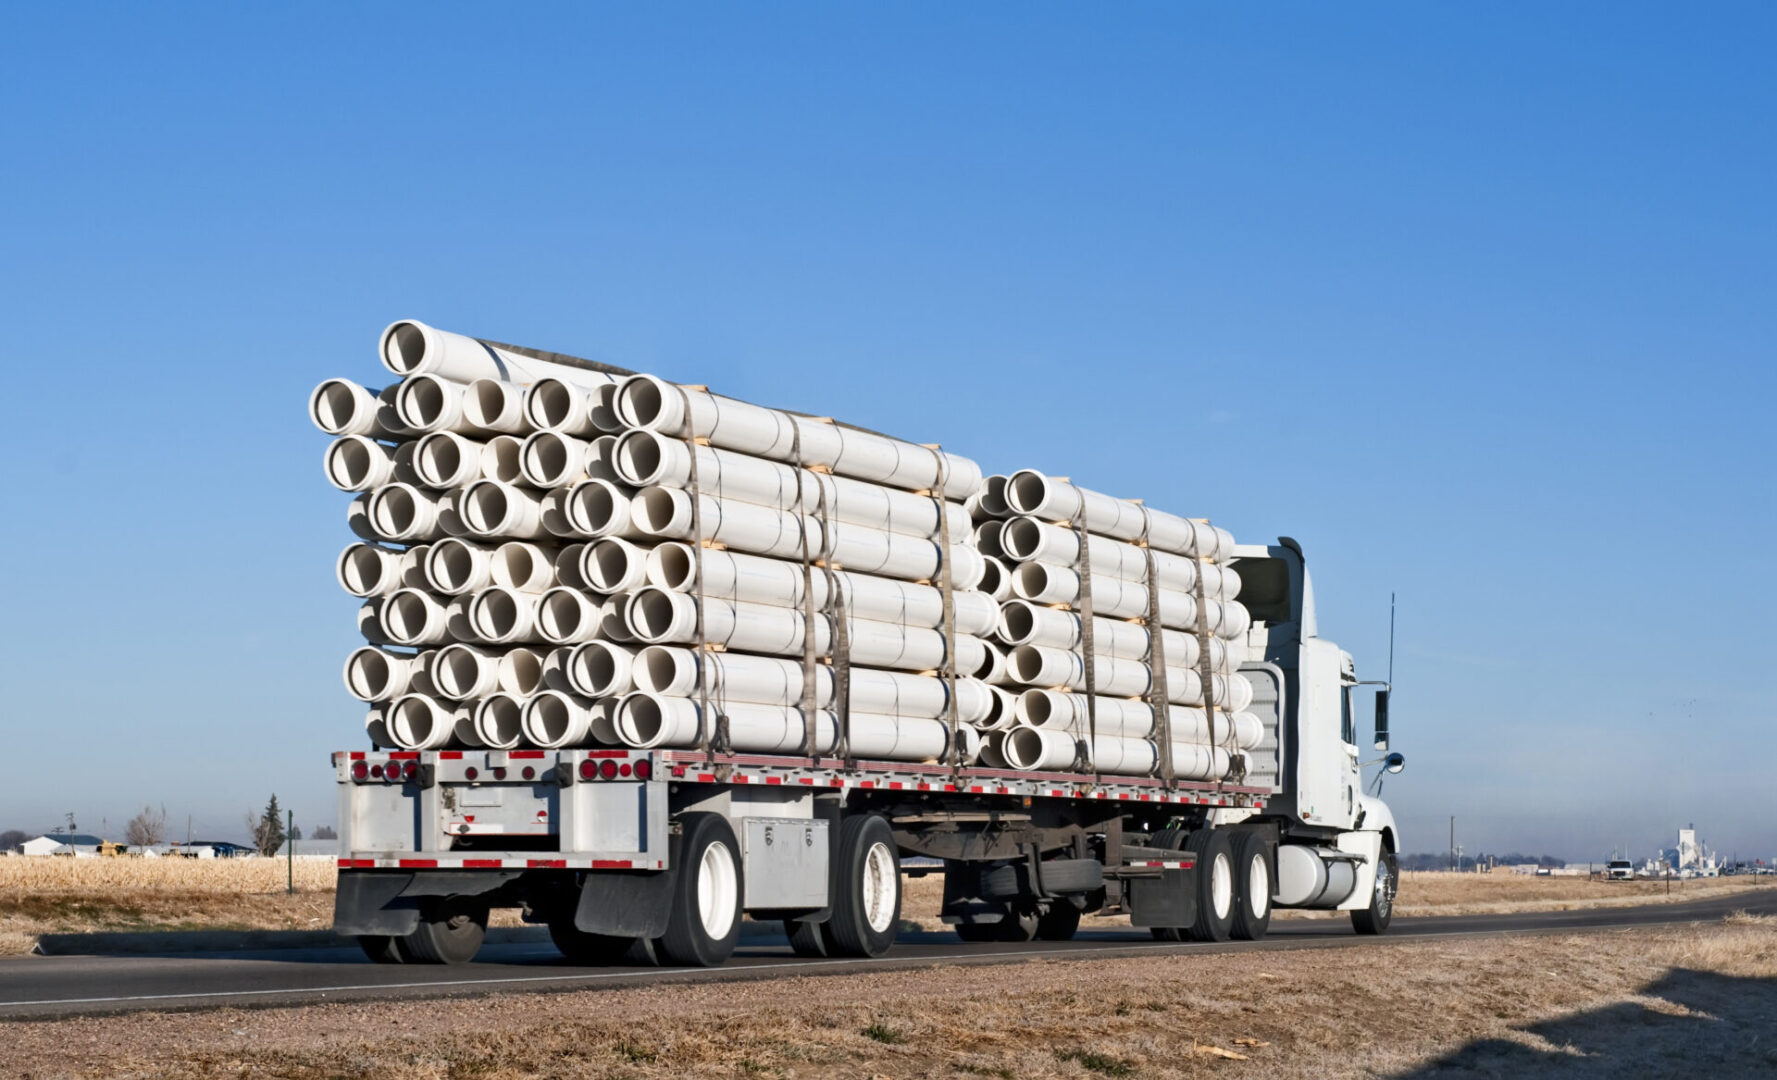 A semi truck hauling multiple loads on the road.